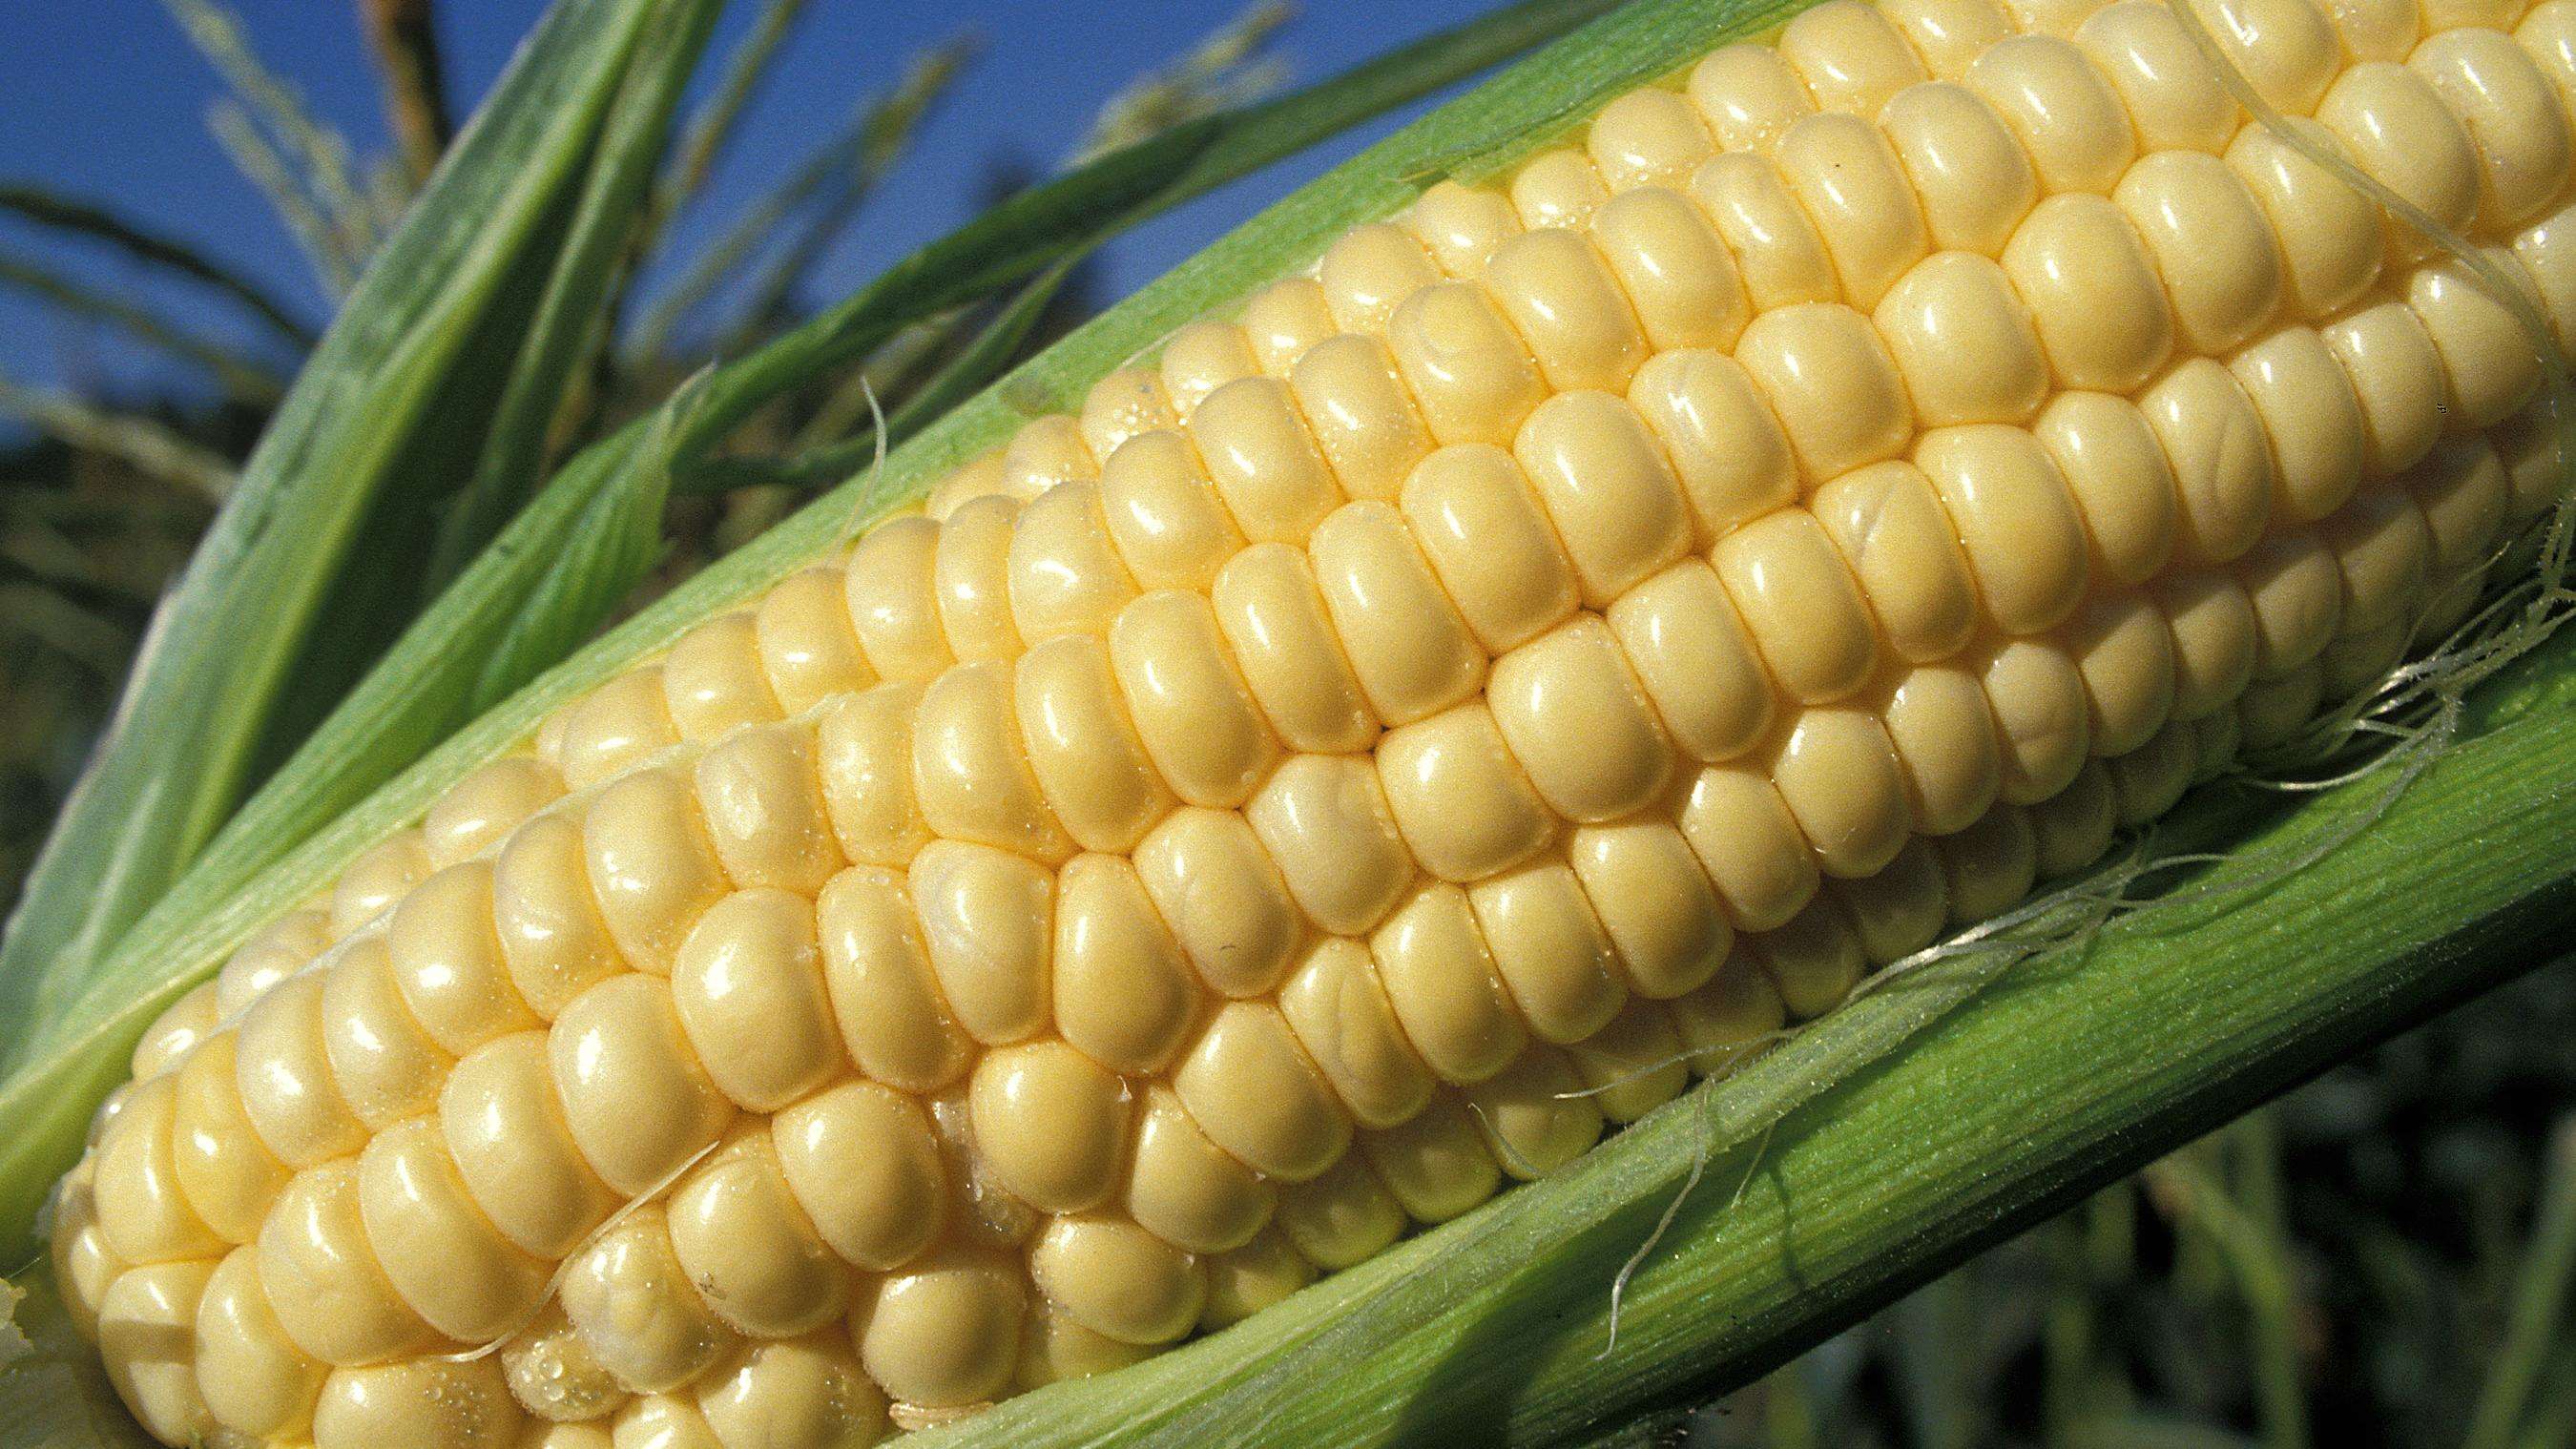 Cob of corn off of stalk